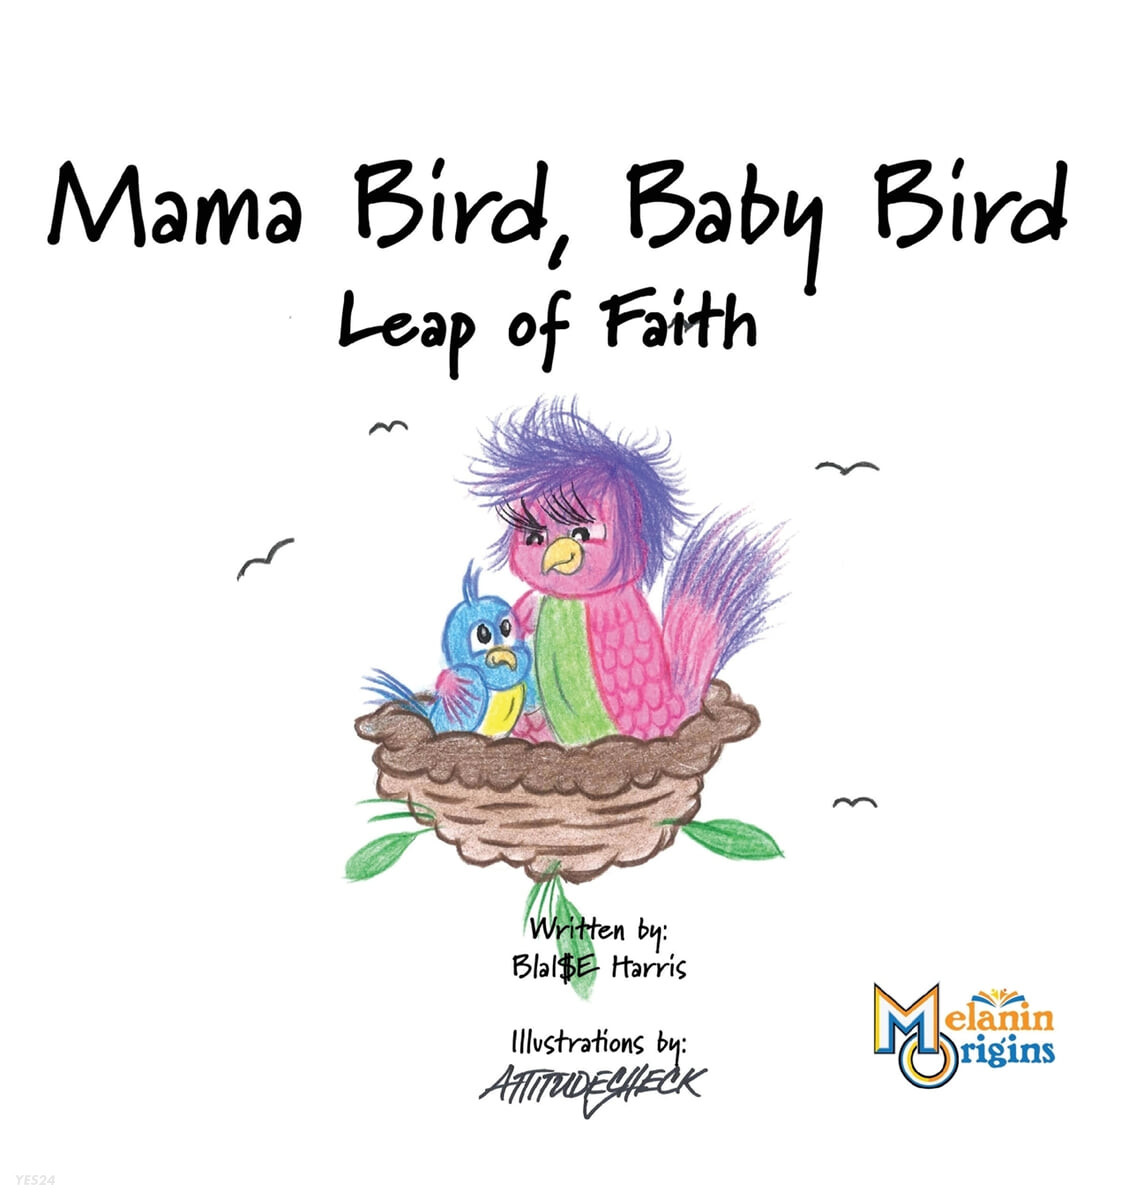 Mama Bird, Baby Bird (Leap of Faith)